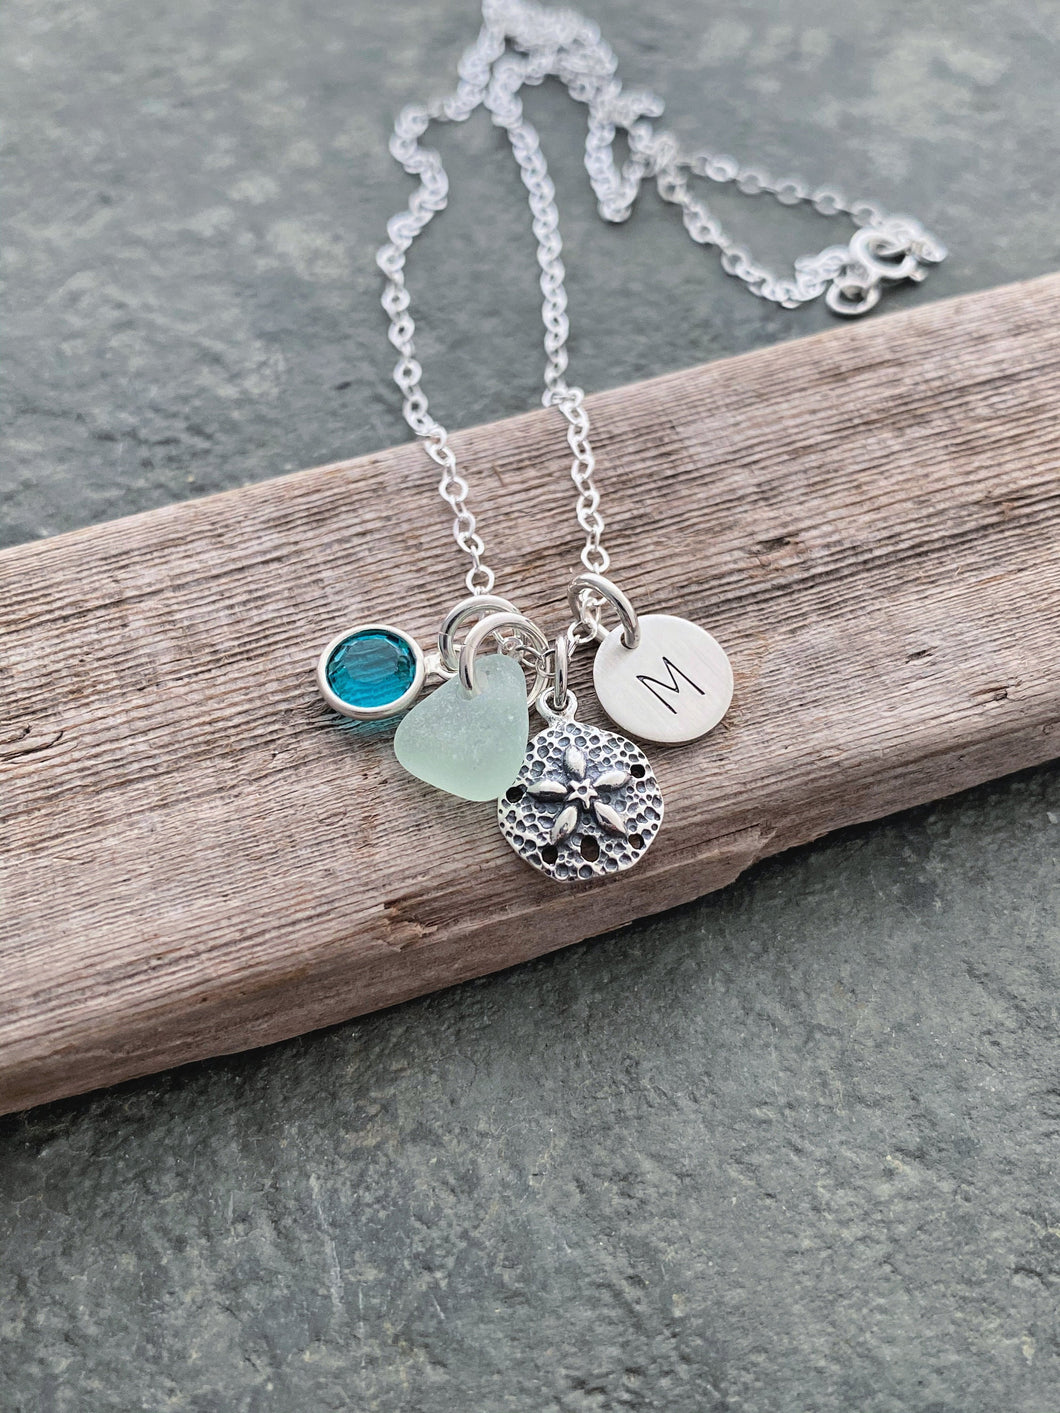 Sterling Silver Sand dollar necklace with genuine Sea Glass, Personalized Initial Charm and Swarovski Crystal Birthstone, Beach jewelry